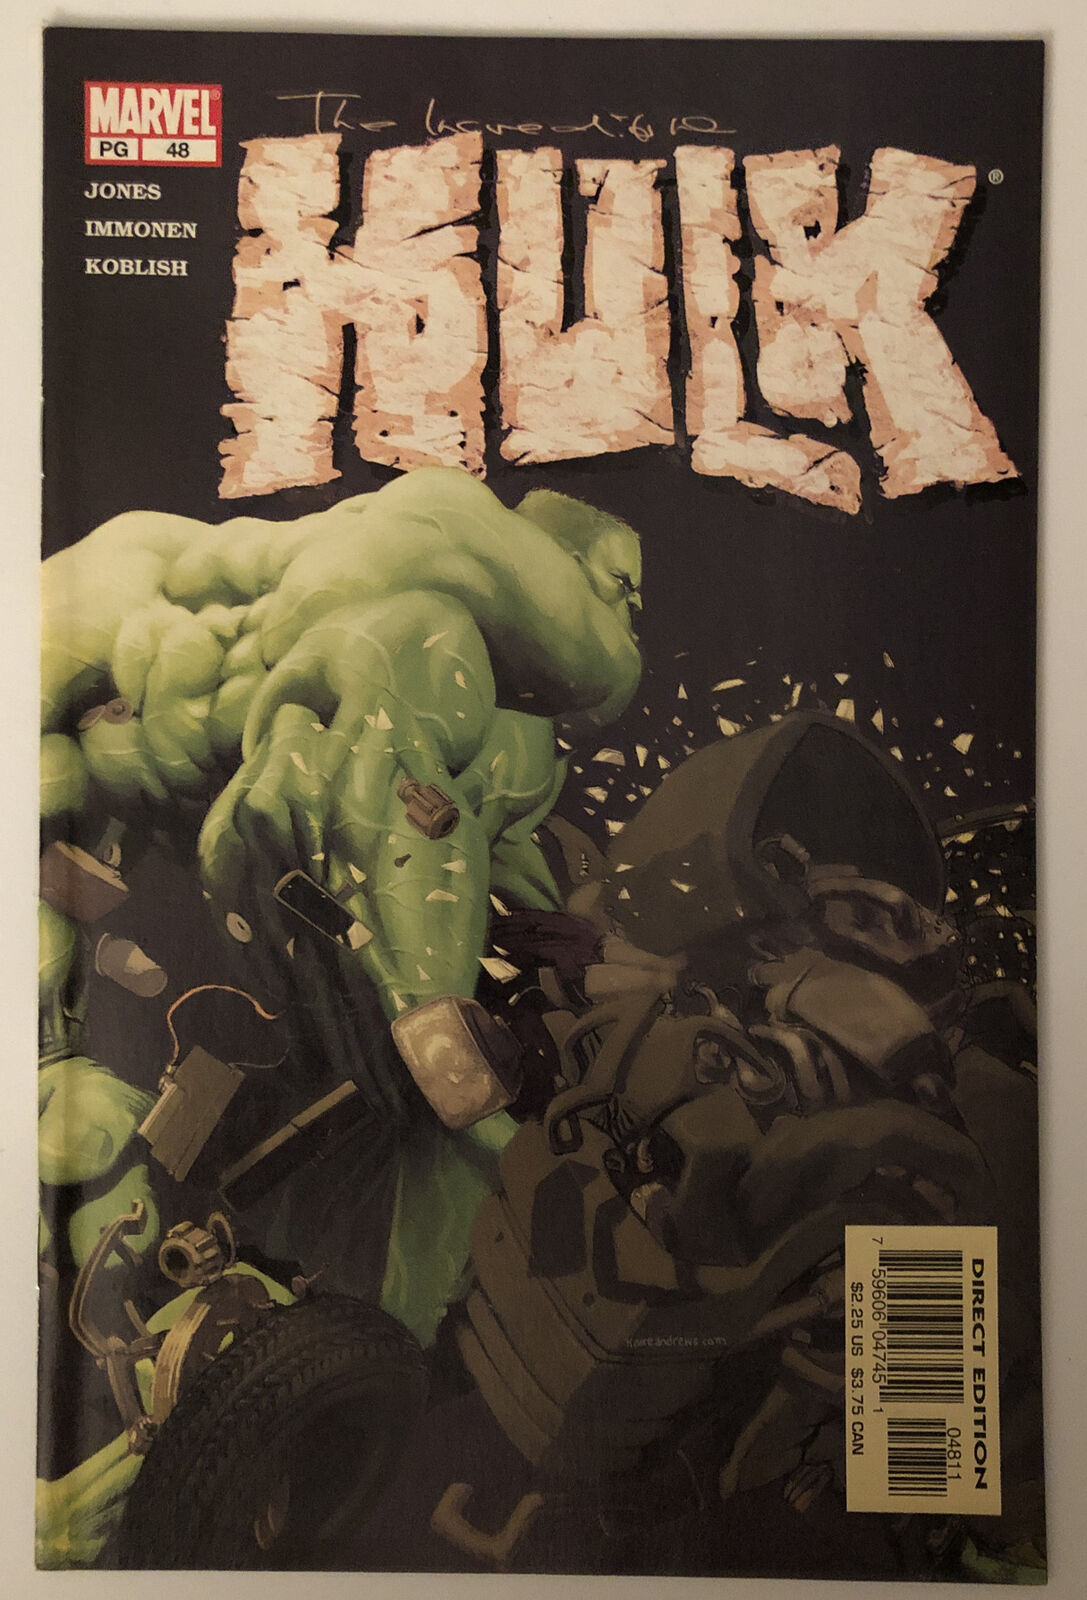 Incredible Hulk #48; Jones Story, Immonen Art; Andrews Cover; Dragon’s Lair Ad